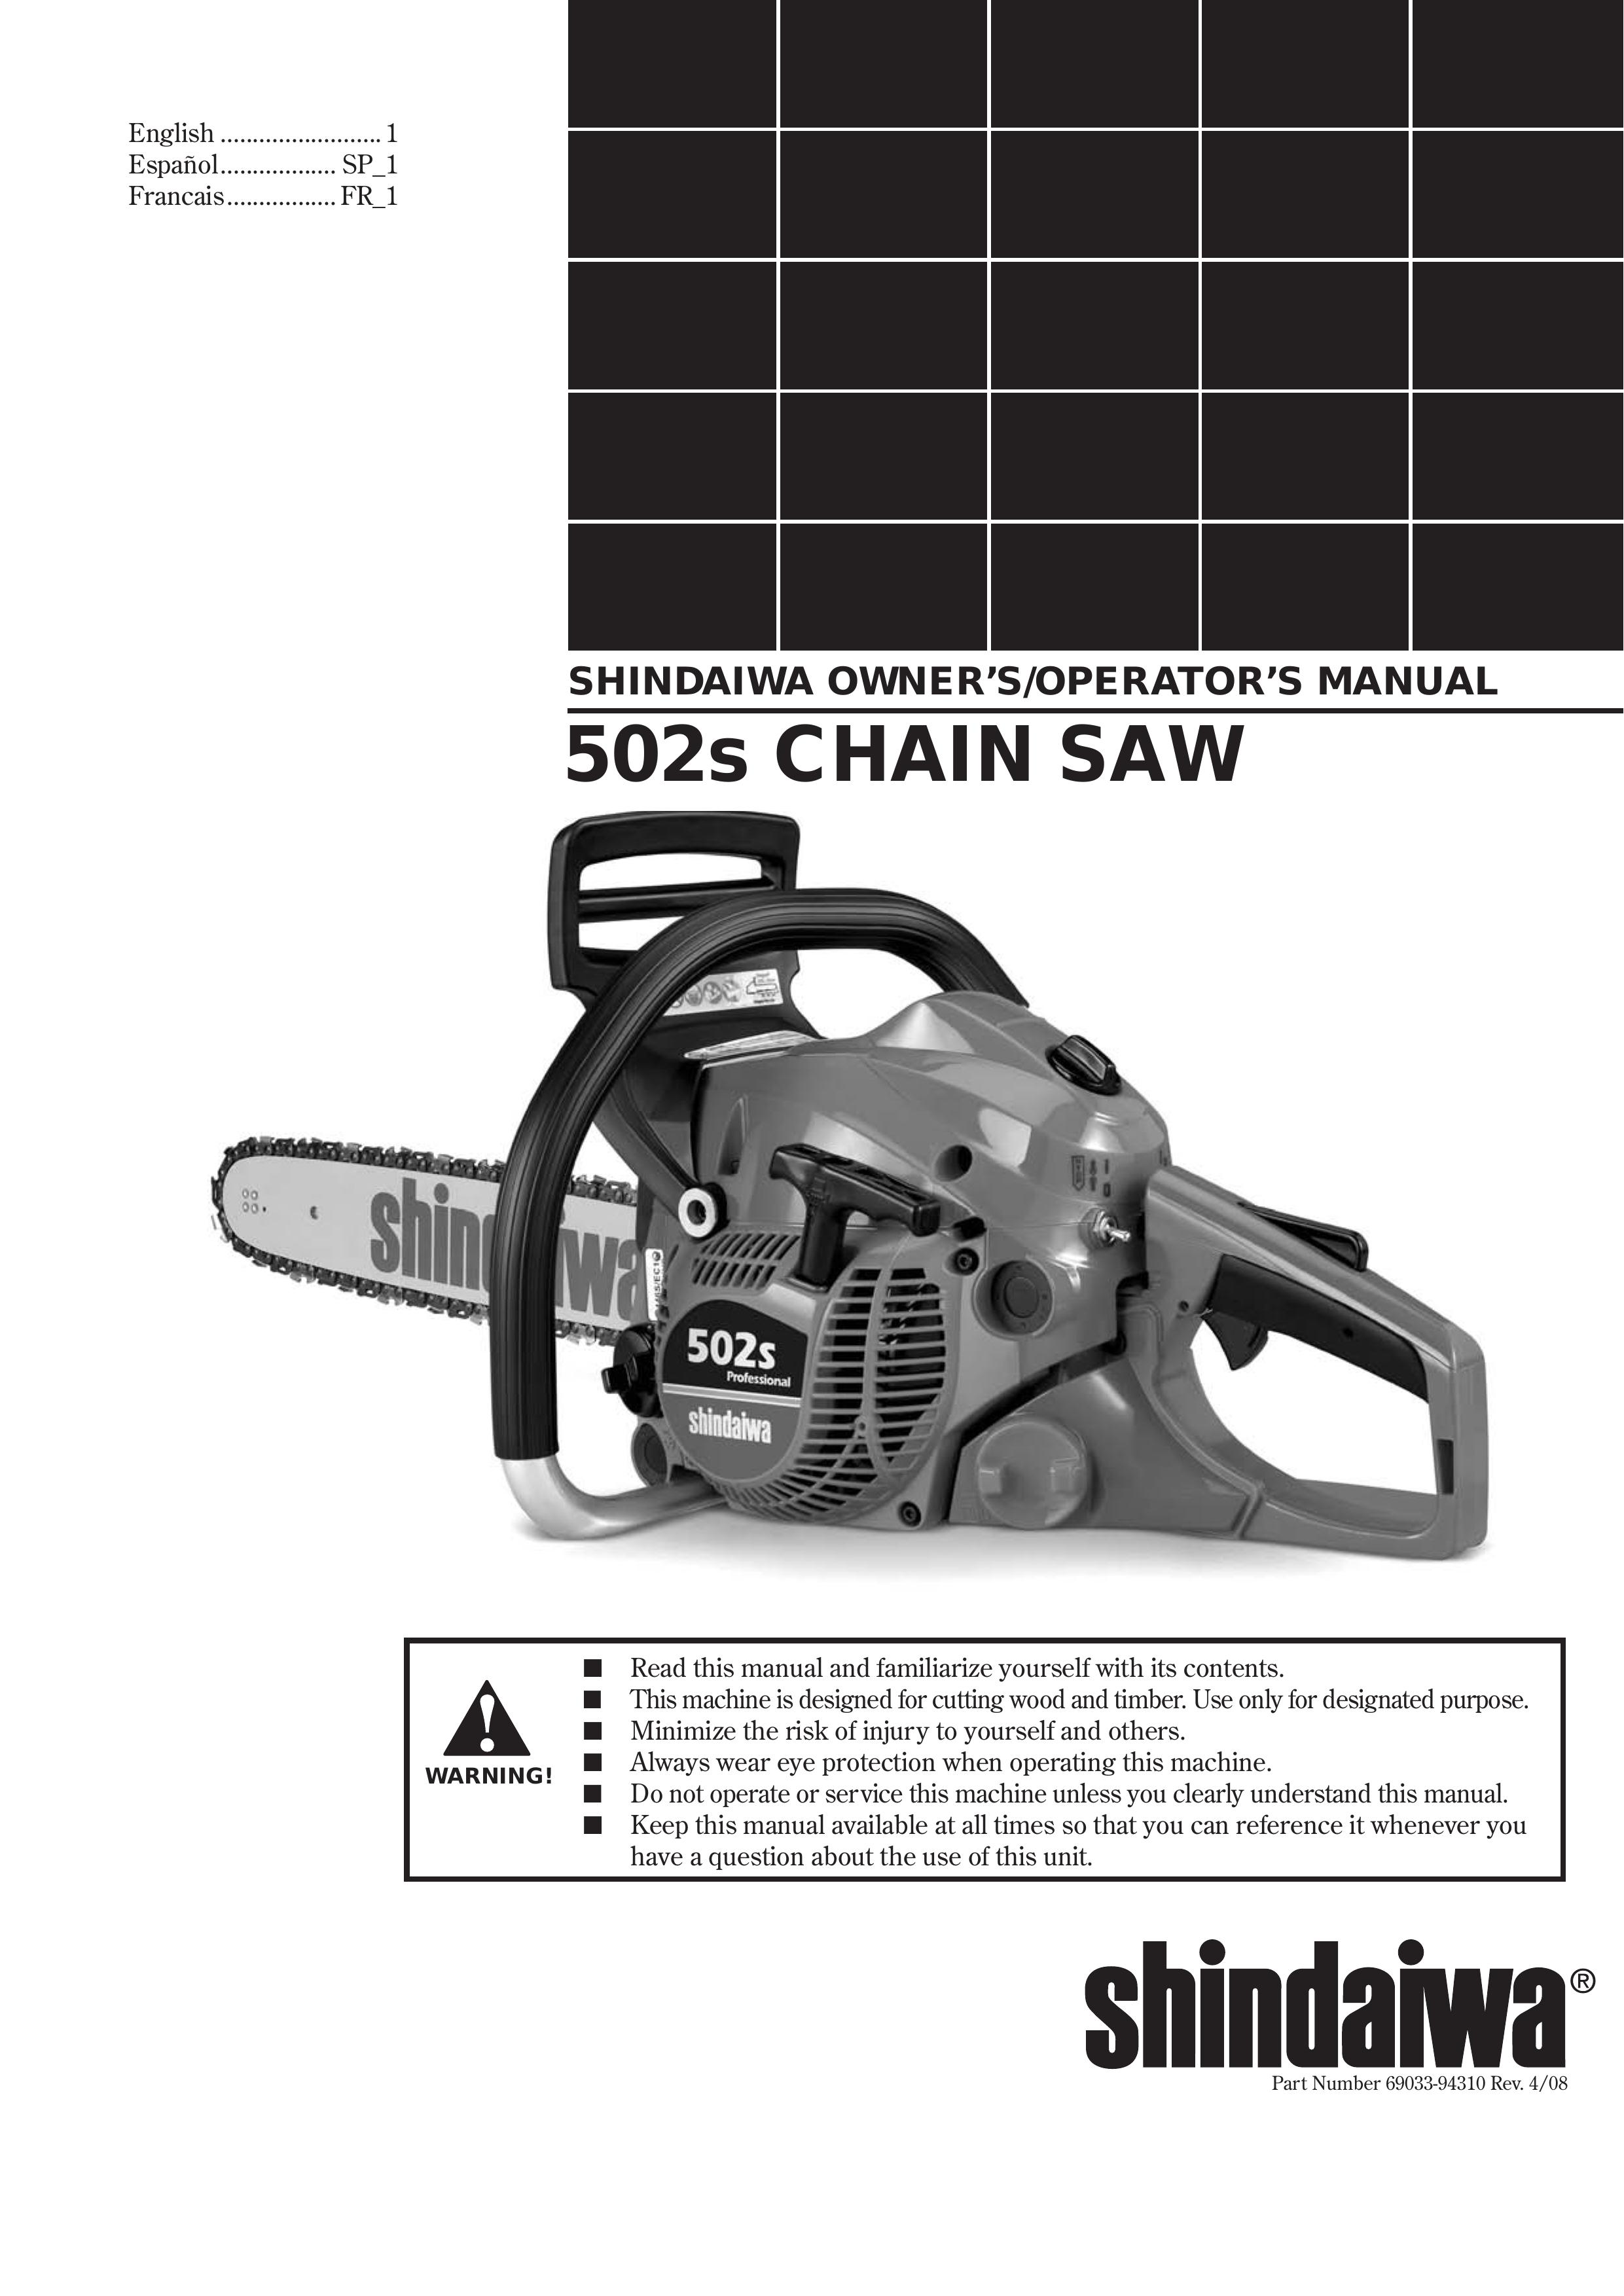 Shindaiwa 502s Chainsaw User Manual